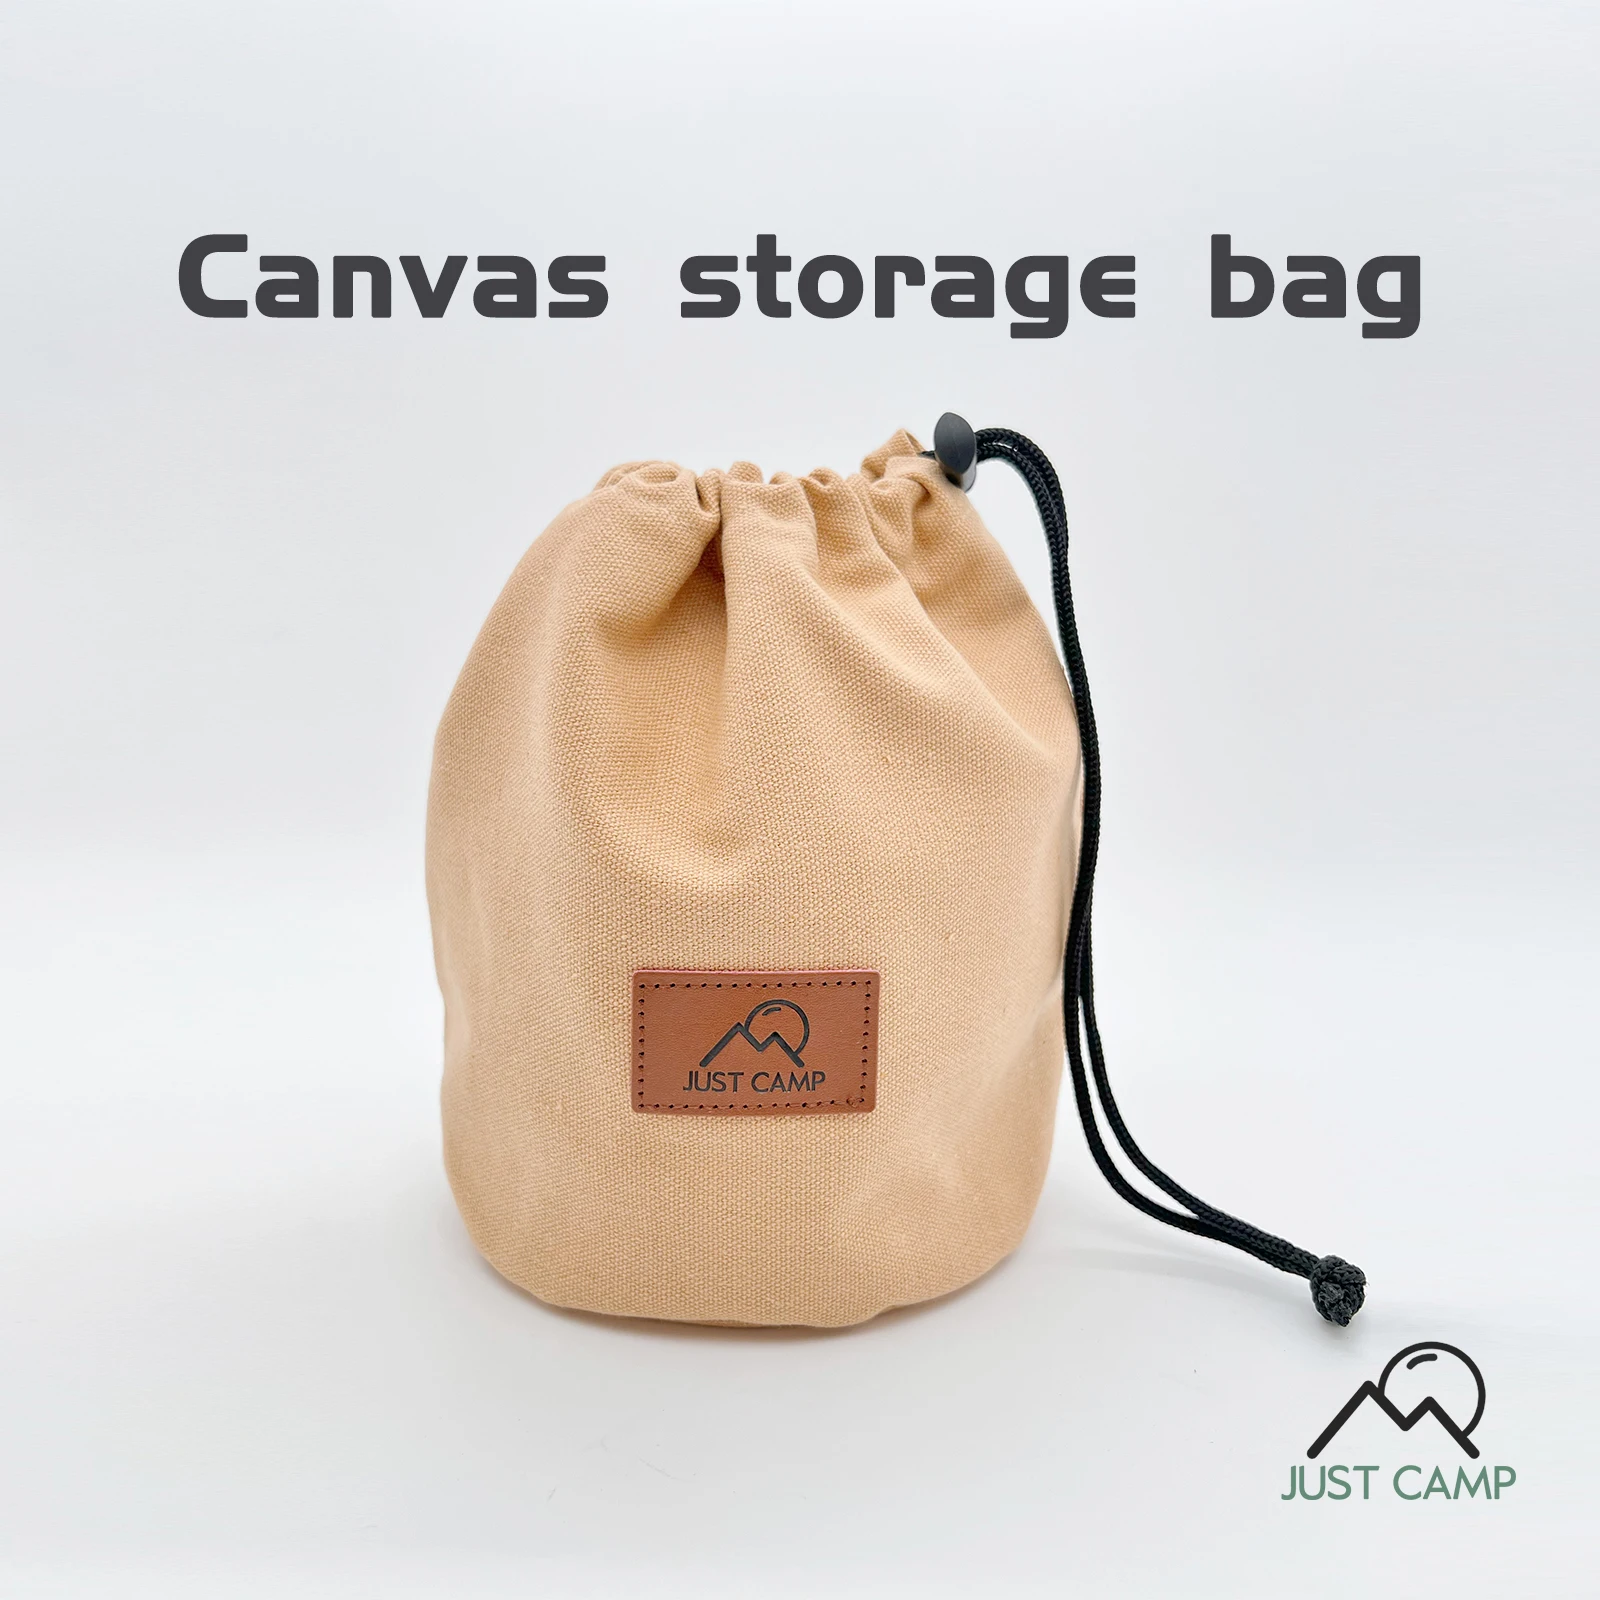 Outdoor Storage Bag Camping Equipment Travel Tourist Glove Bag Arrangement 12 Ampere Canvas Drawstring Design Organizers